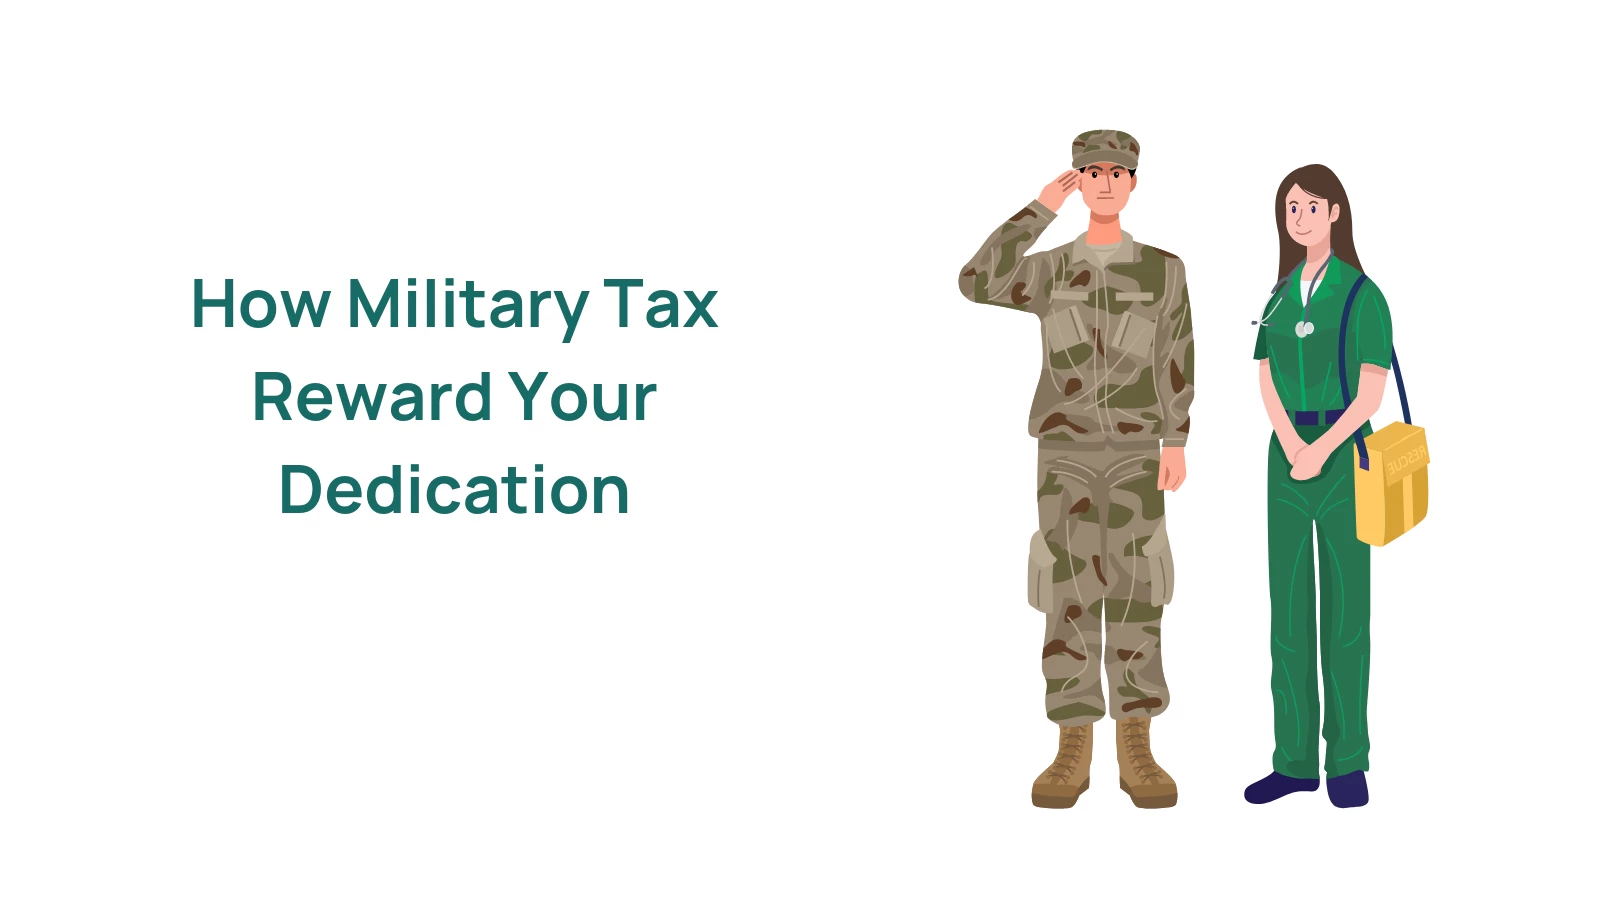 How Military Taxes Reward Your Dedication